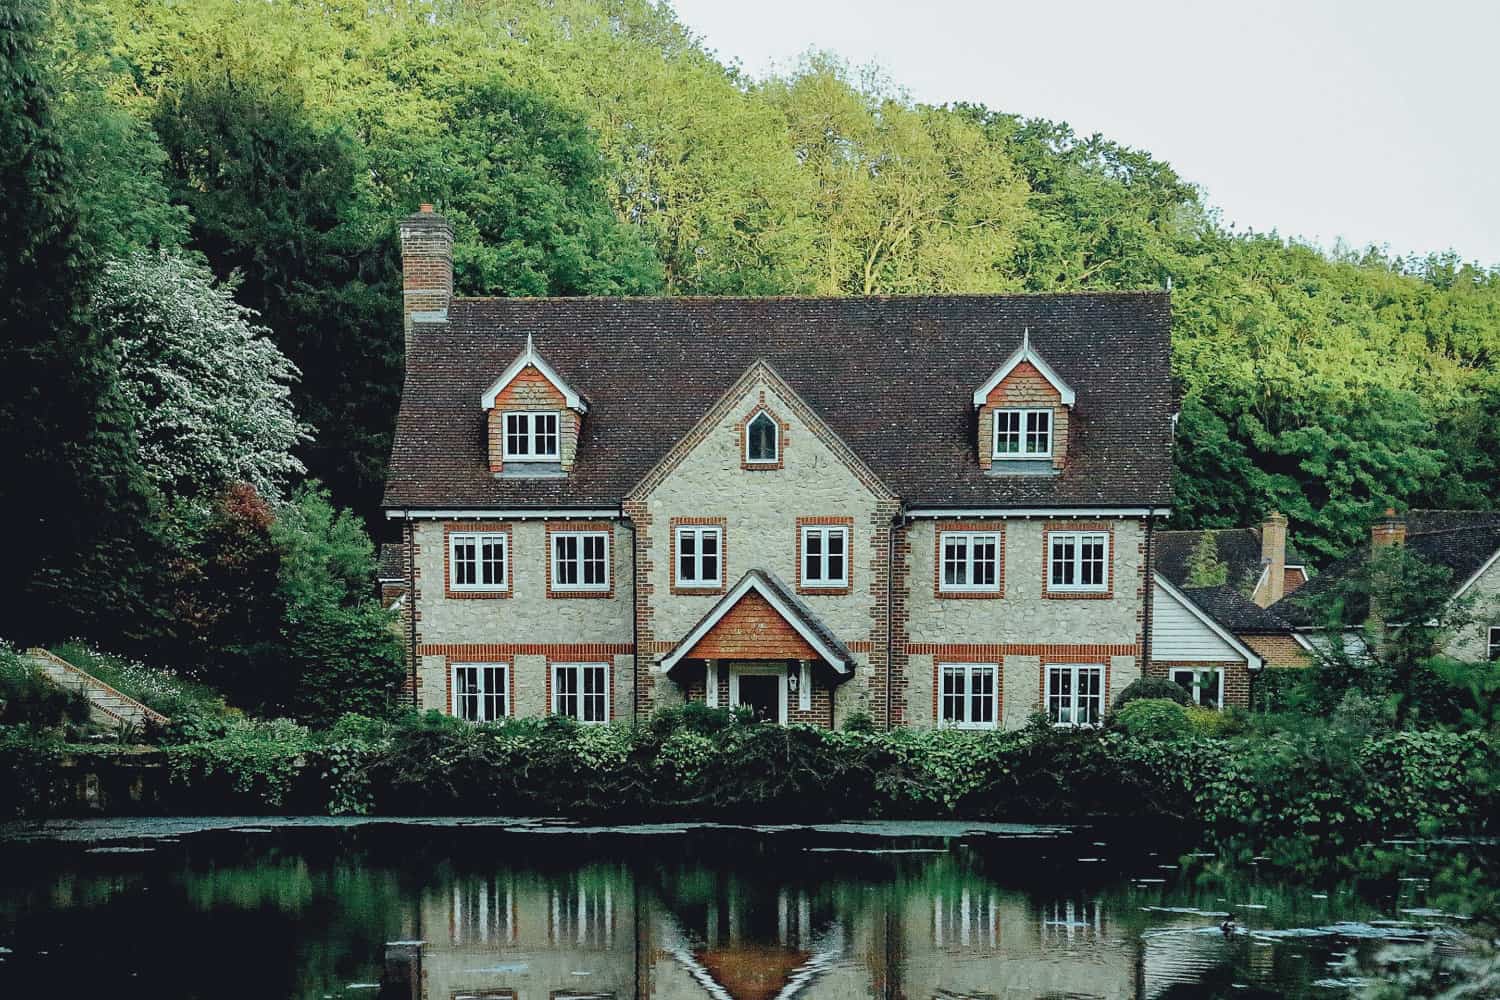 A beautiful home on a lake